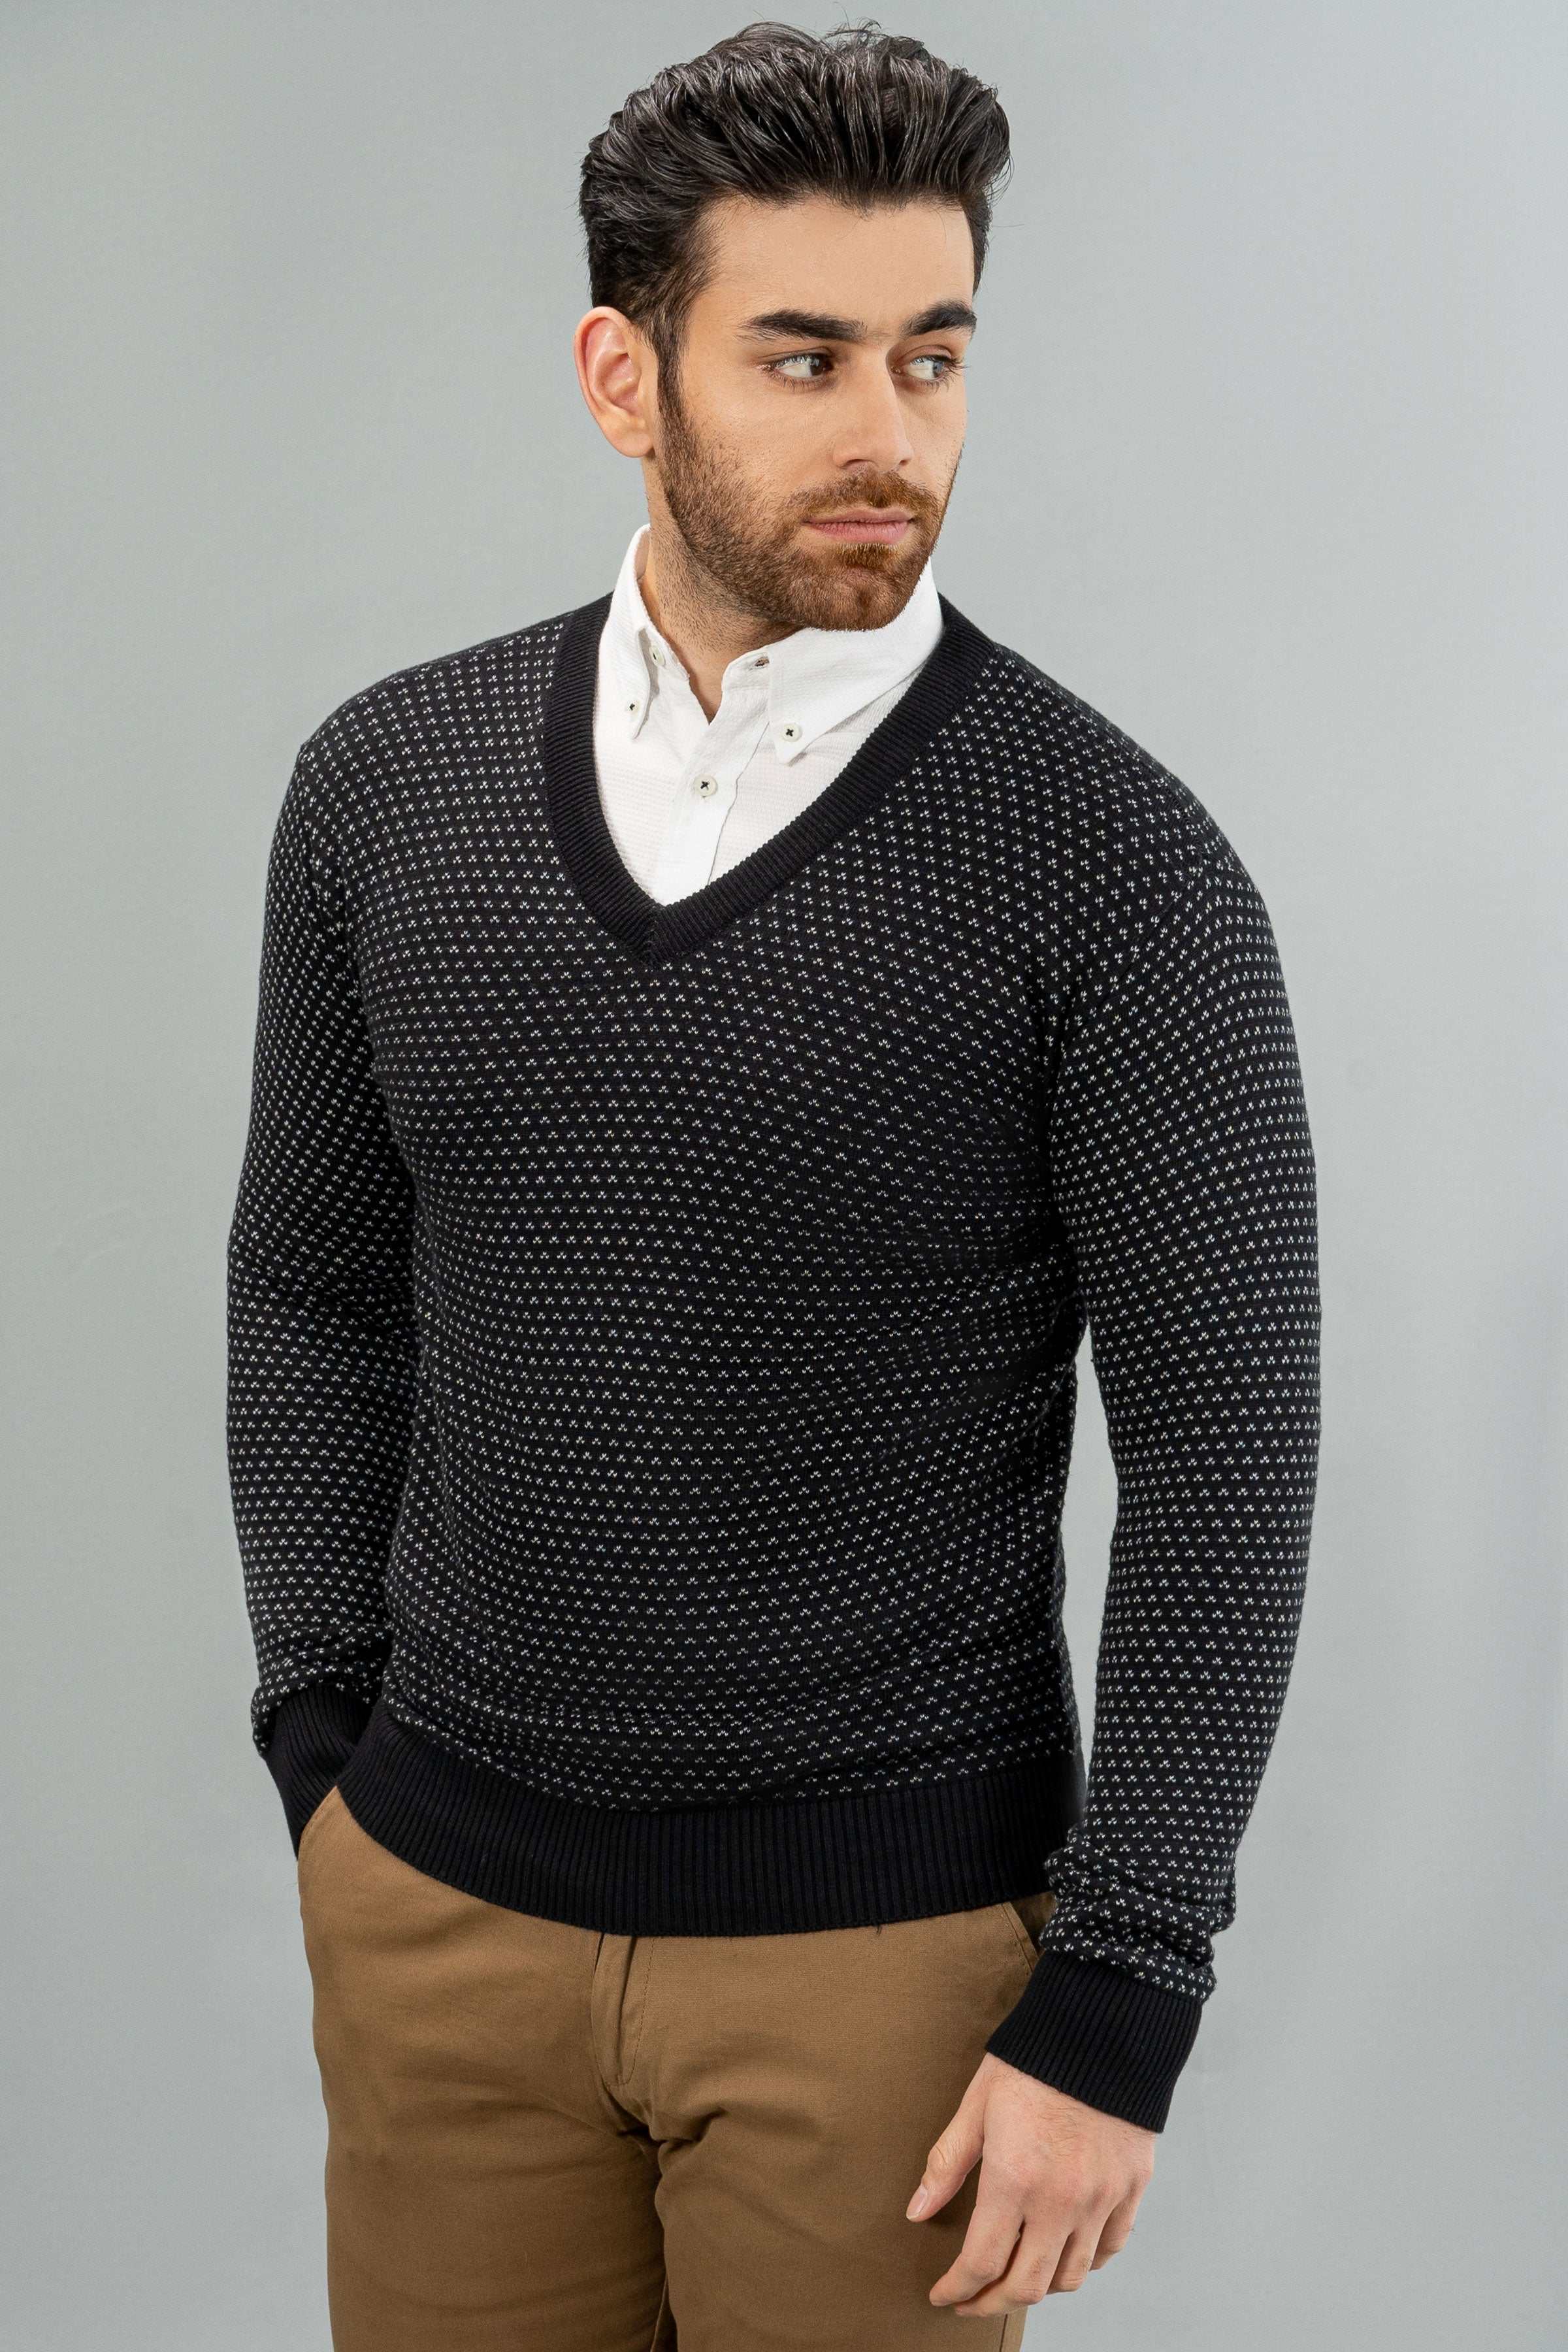 Sweaters For Men | Men’s Sweaters & Turtlenecks Online | Charcoal Clothing